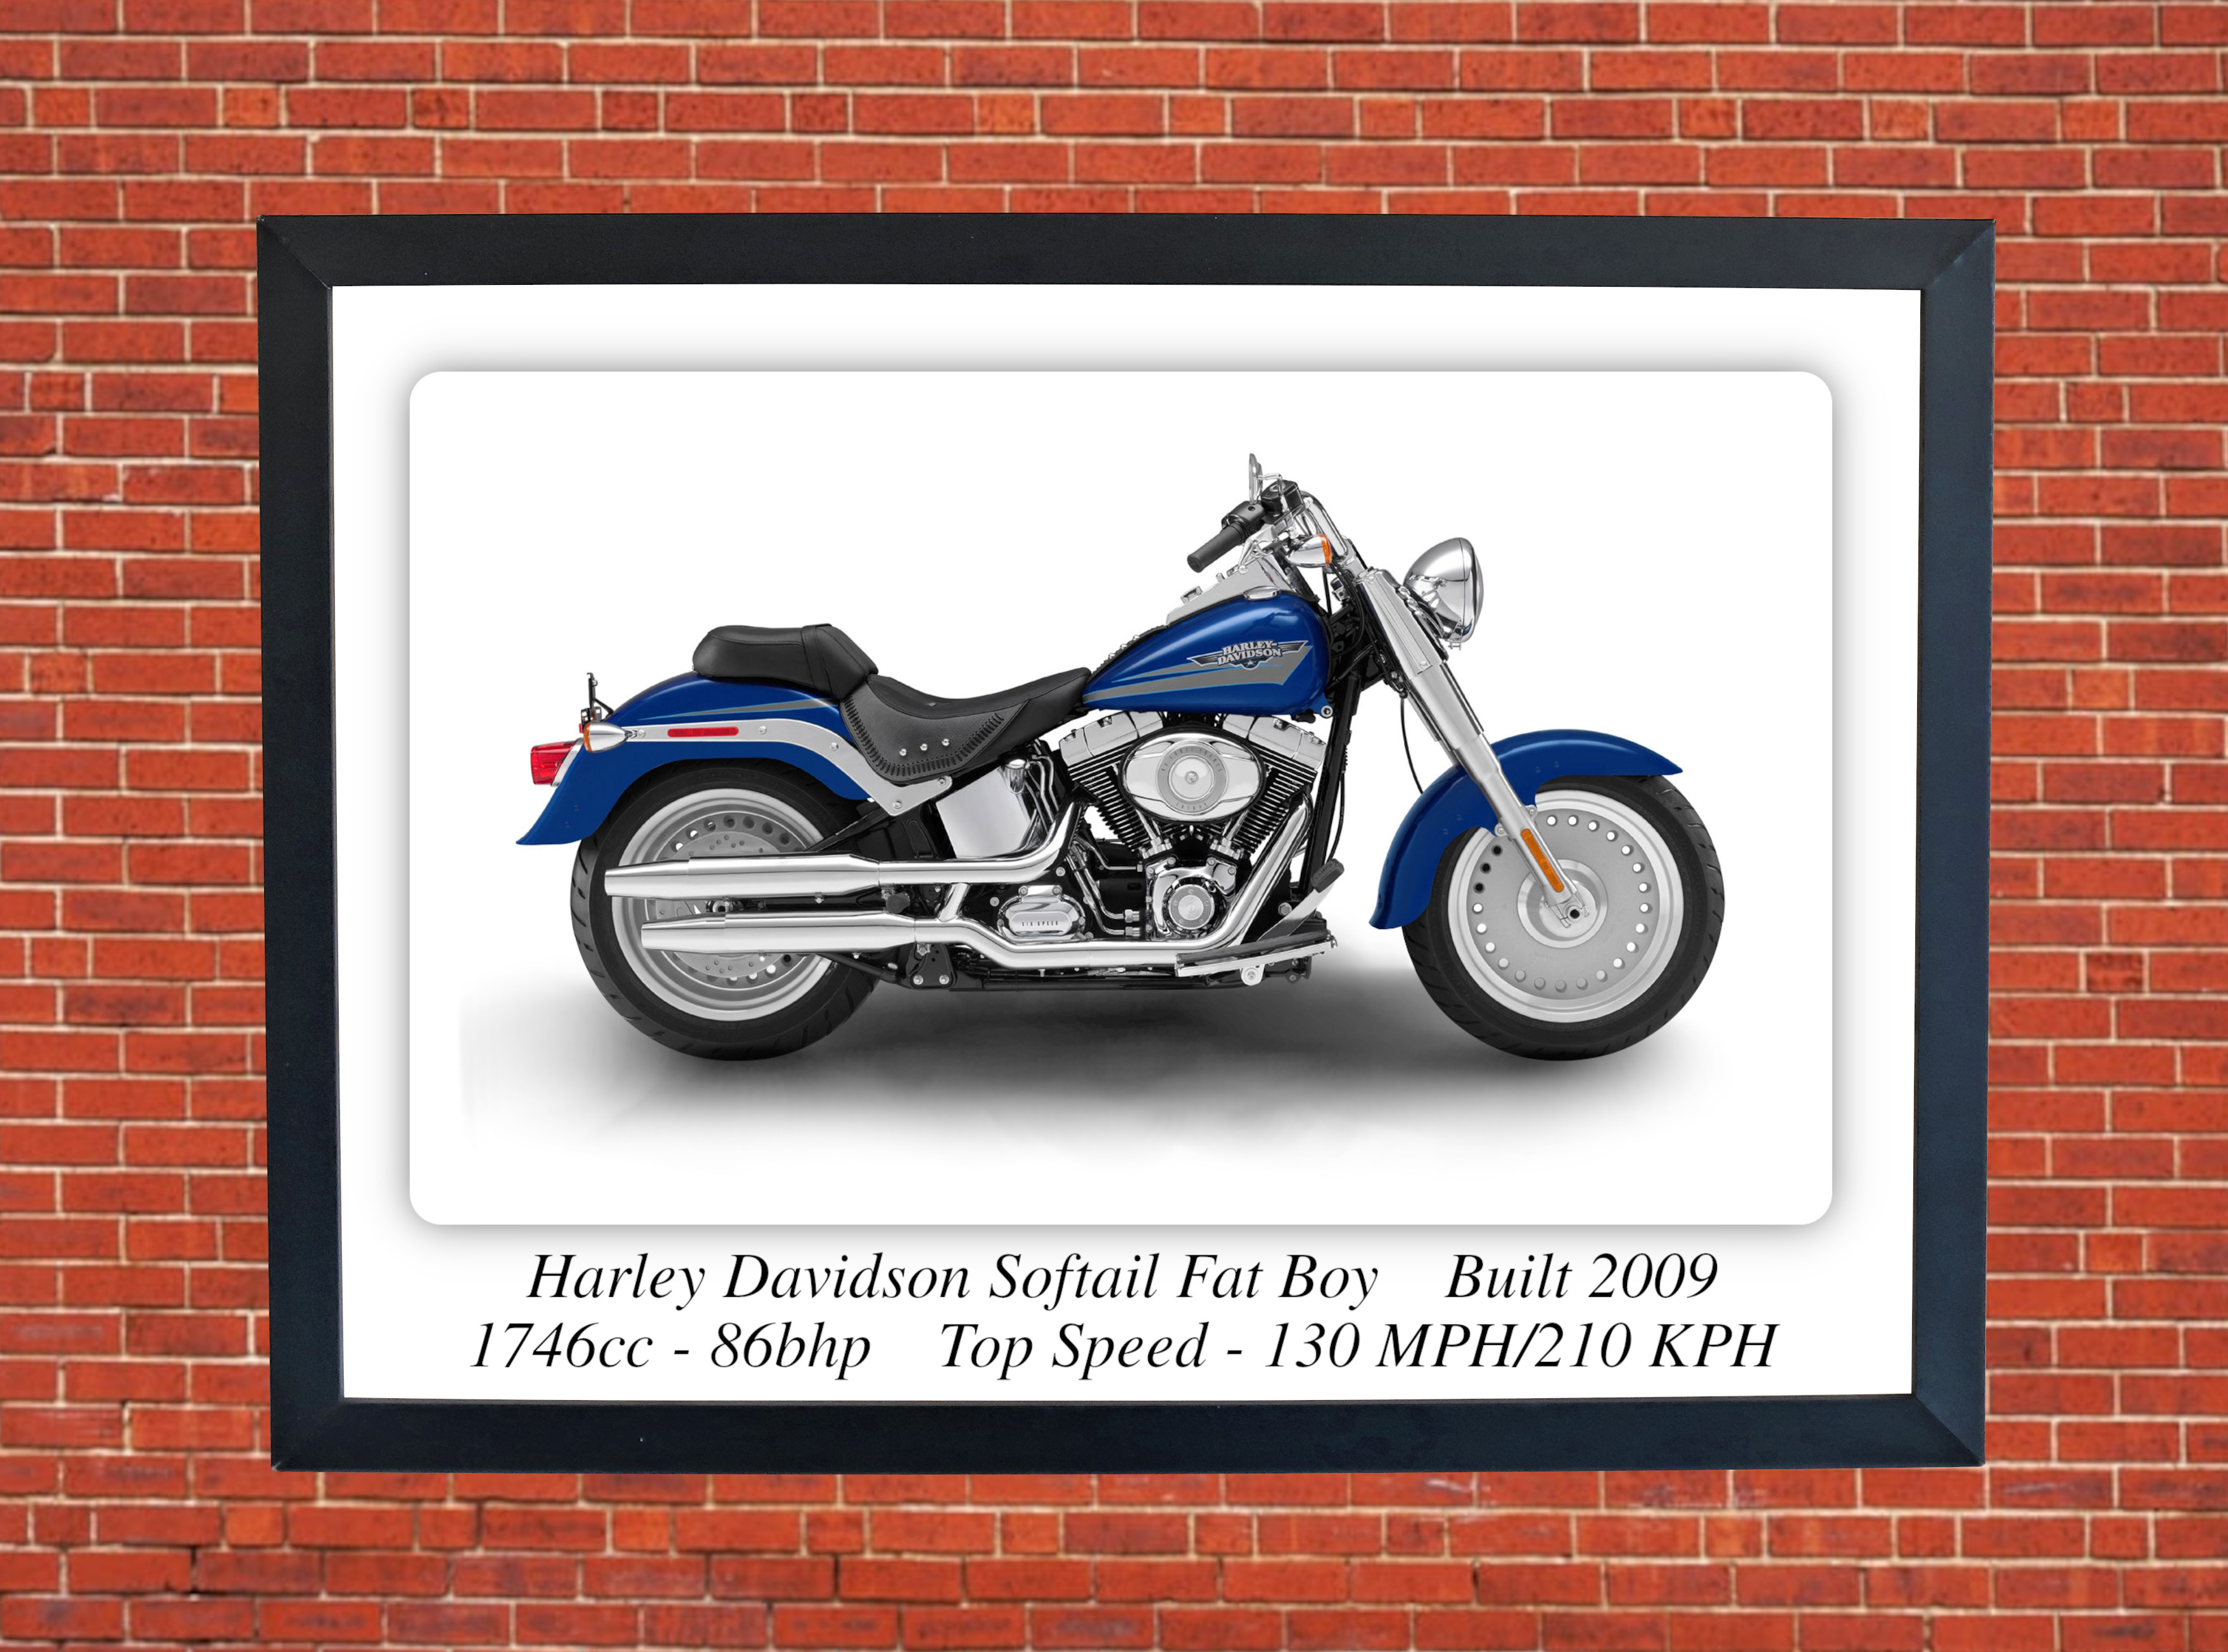 Harley Davidson Softail Fat Boy Motorcycle - A3 Size Print Poster